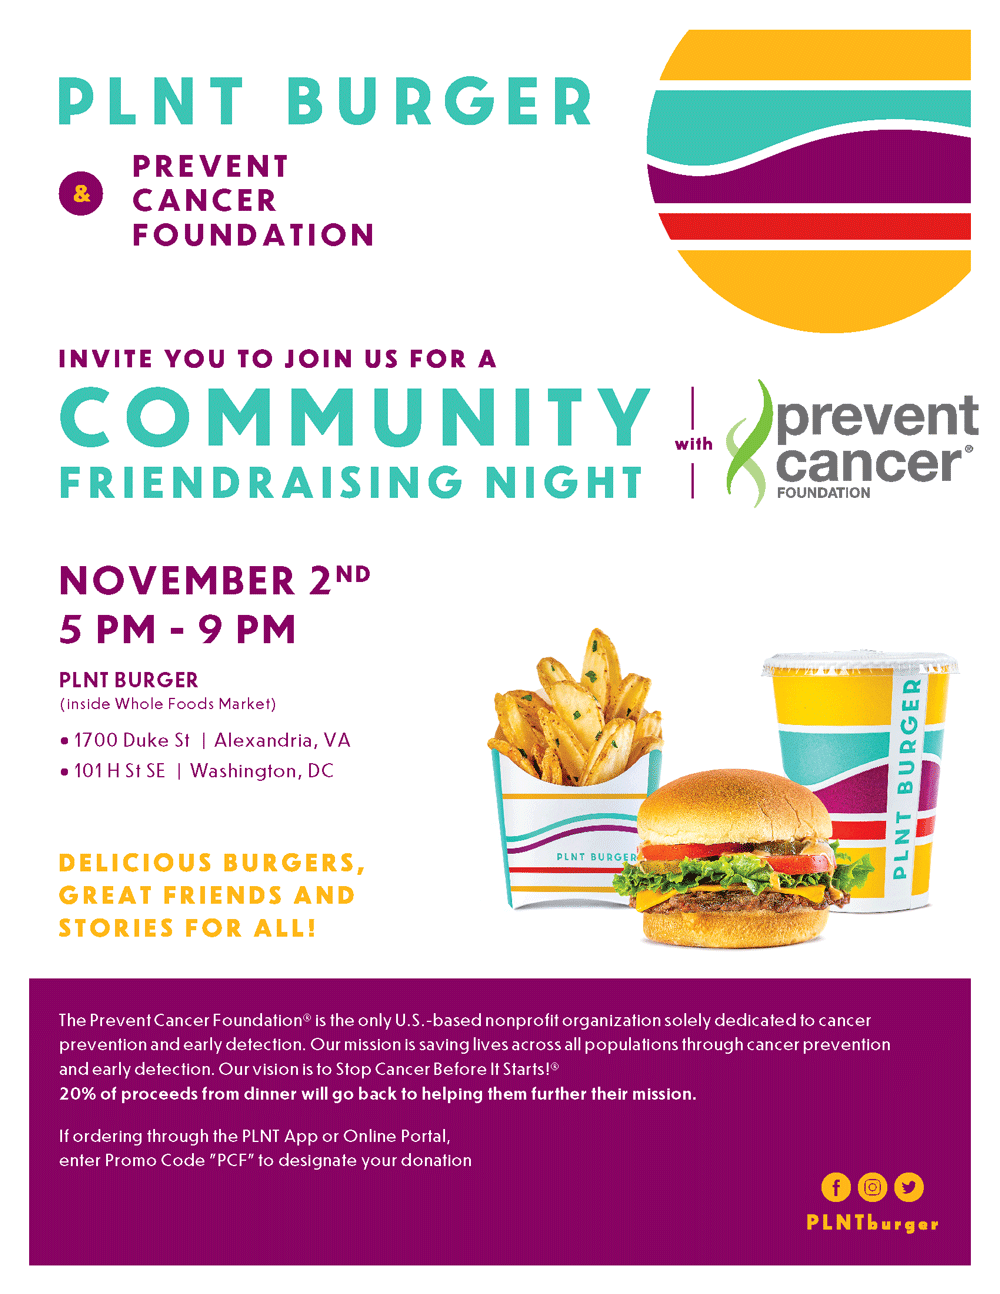 PLNT Burger & Prevent Cancer Foundation Community Friendraising Night